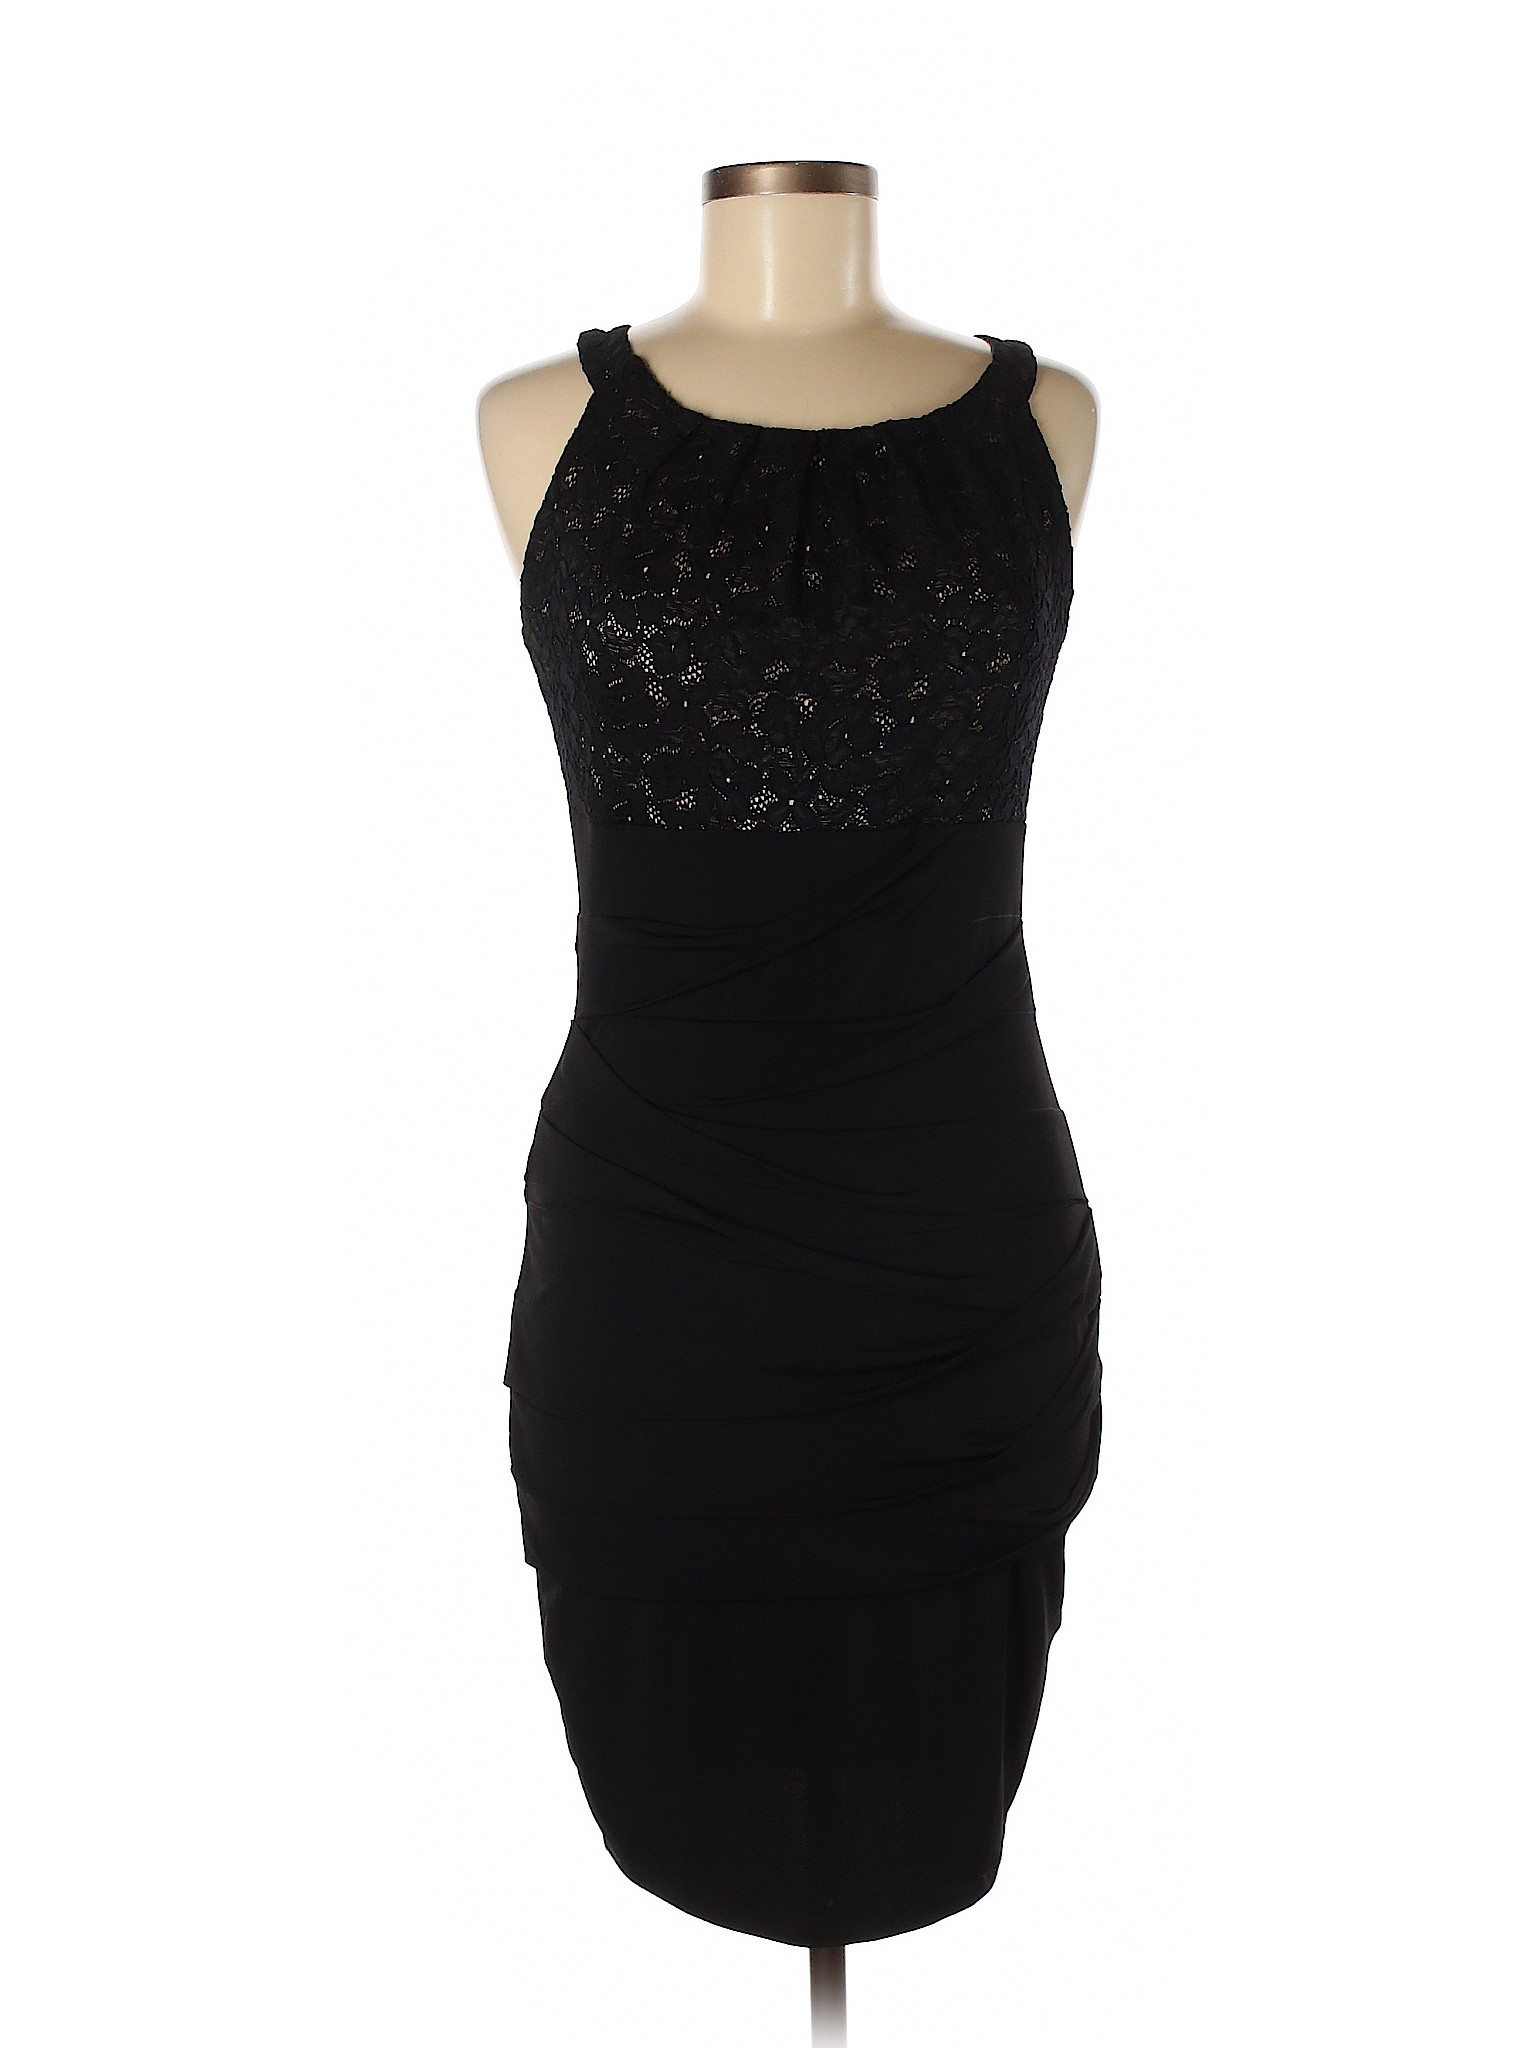 Valerie Bertinelli Women Black Cocktail Dress 8 | eBay